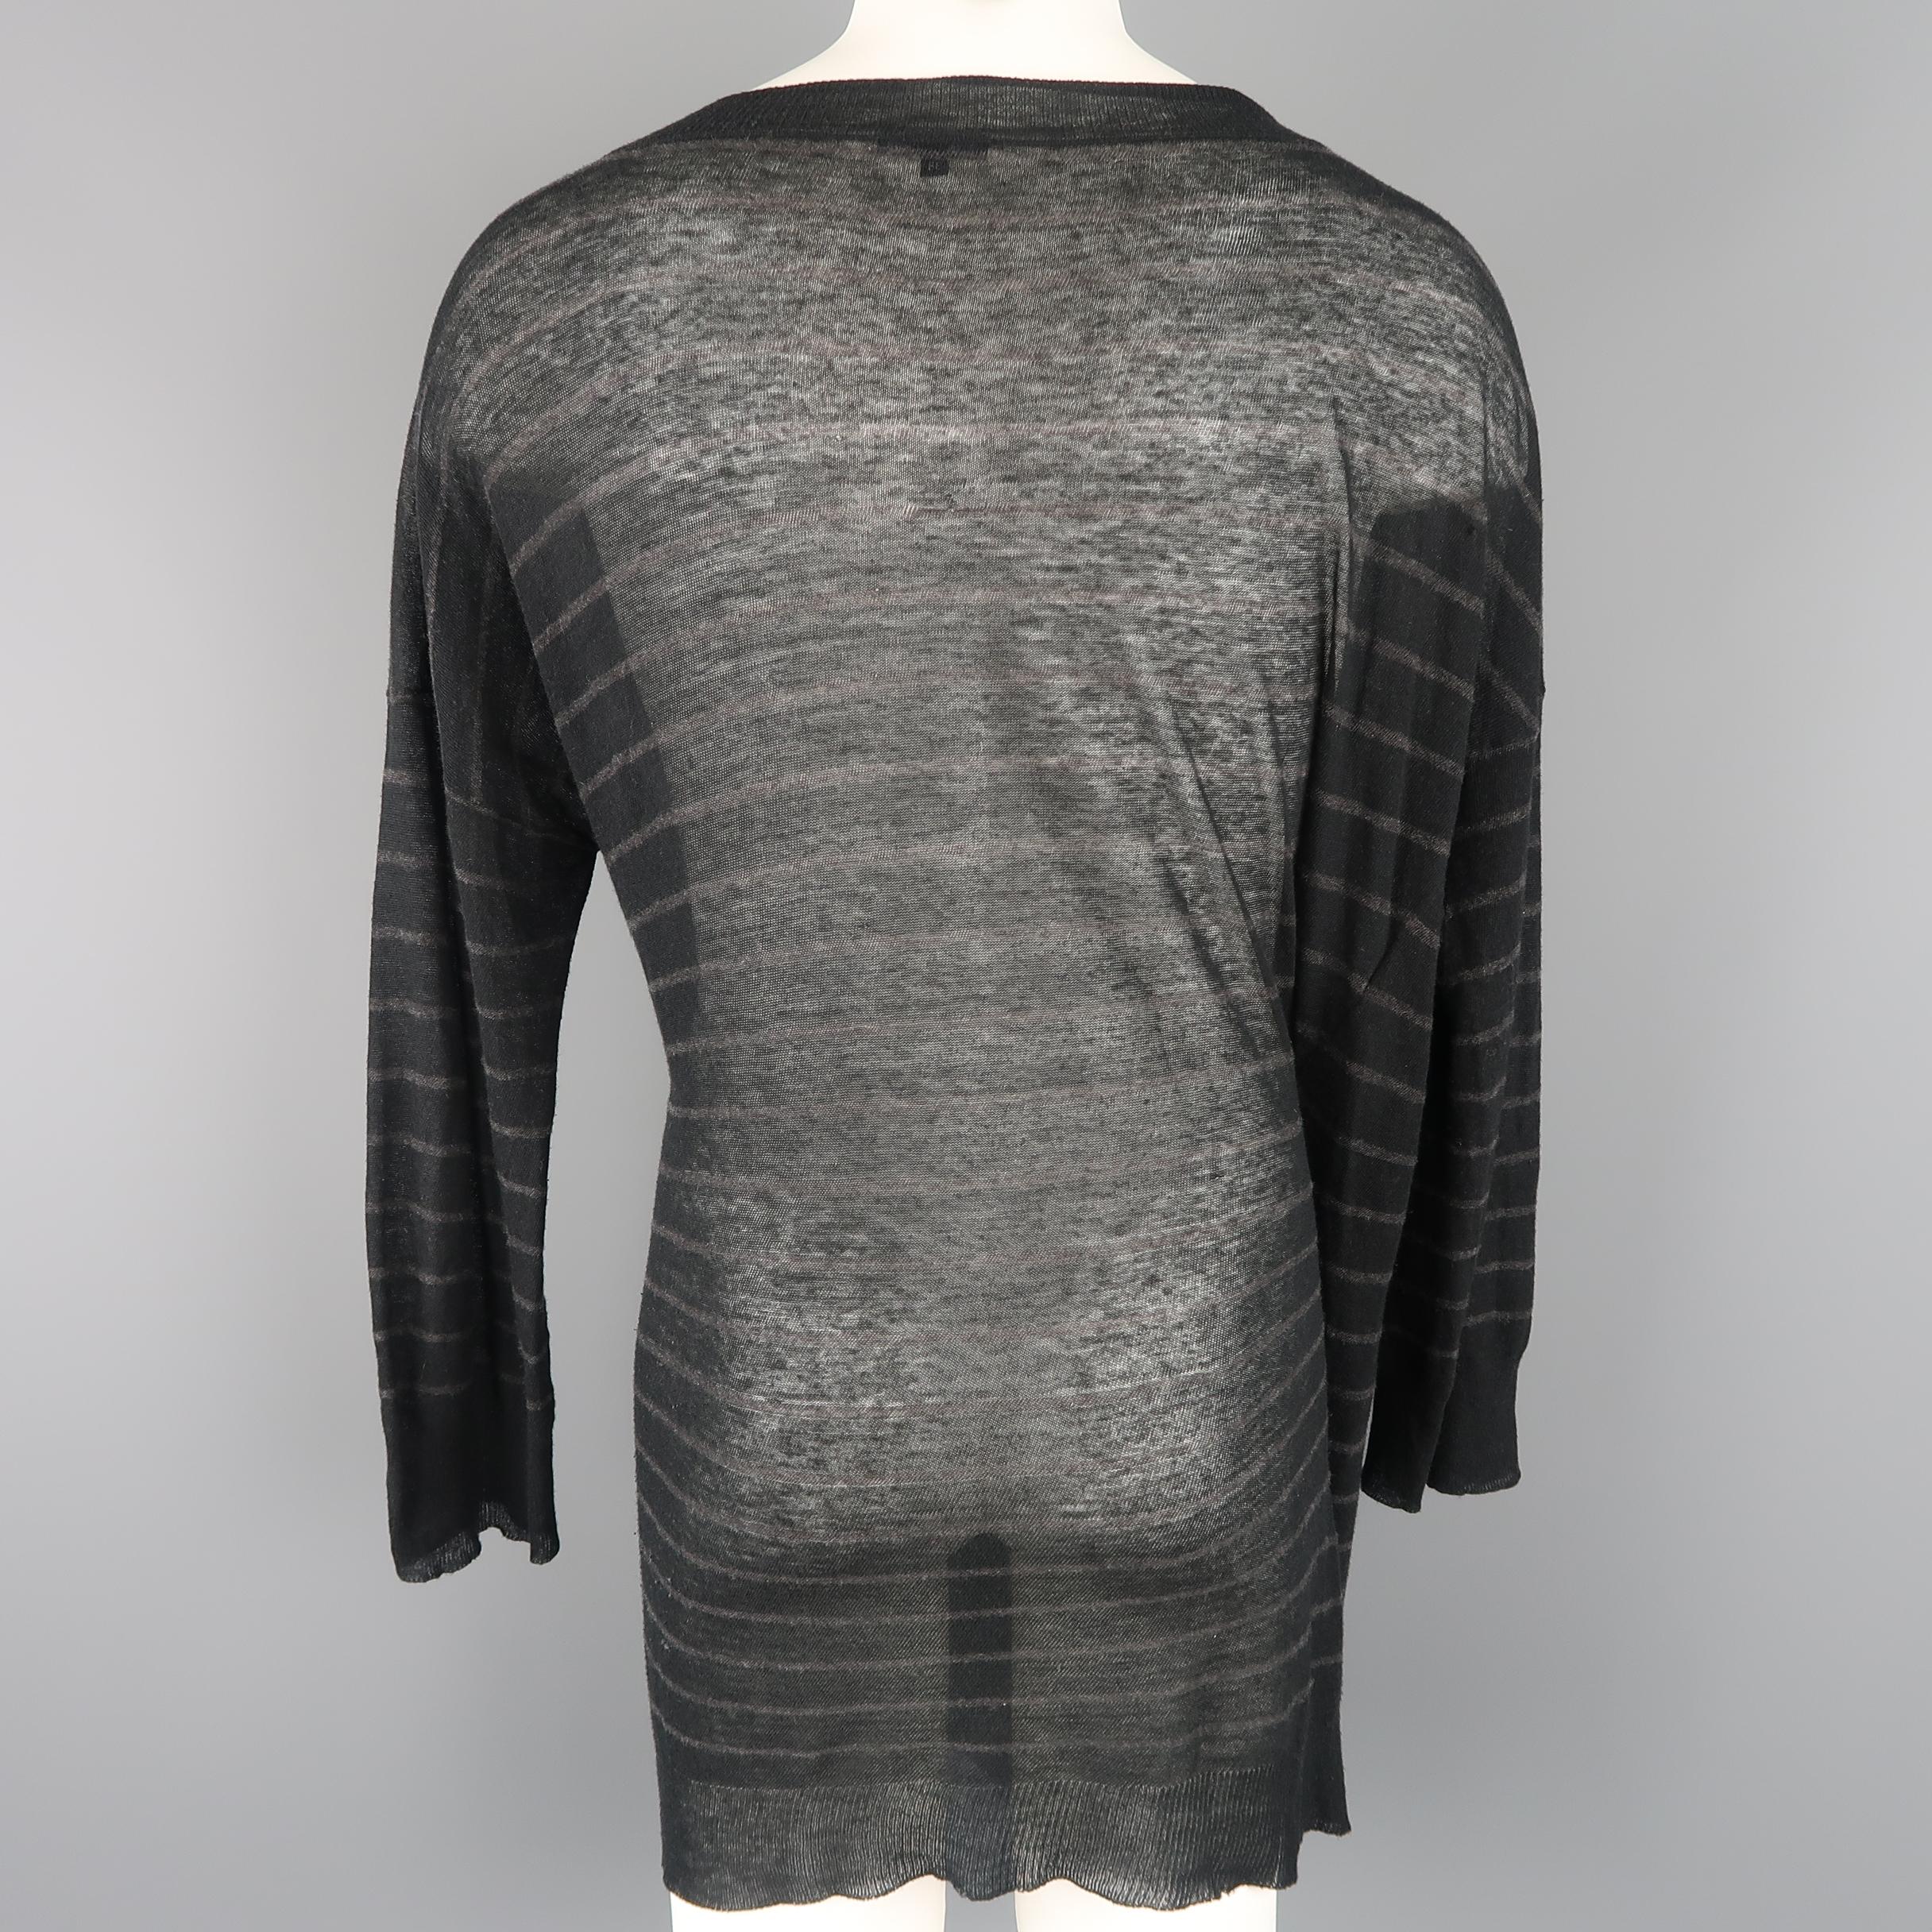 Women's or Men's ANN DEMEULEMEESTER Black Striped Sheer Knit Oversized Tied Sweater